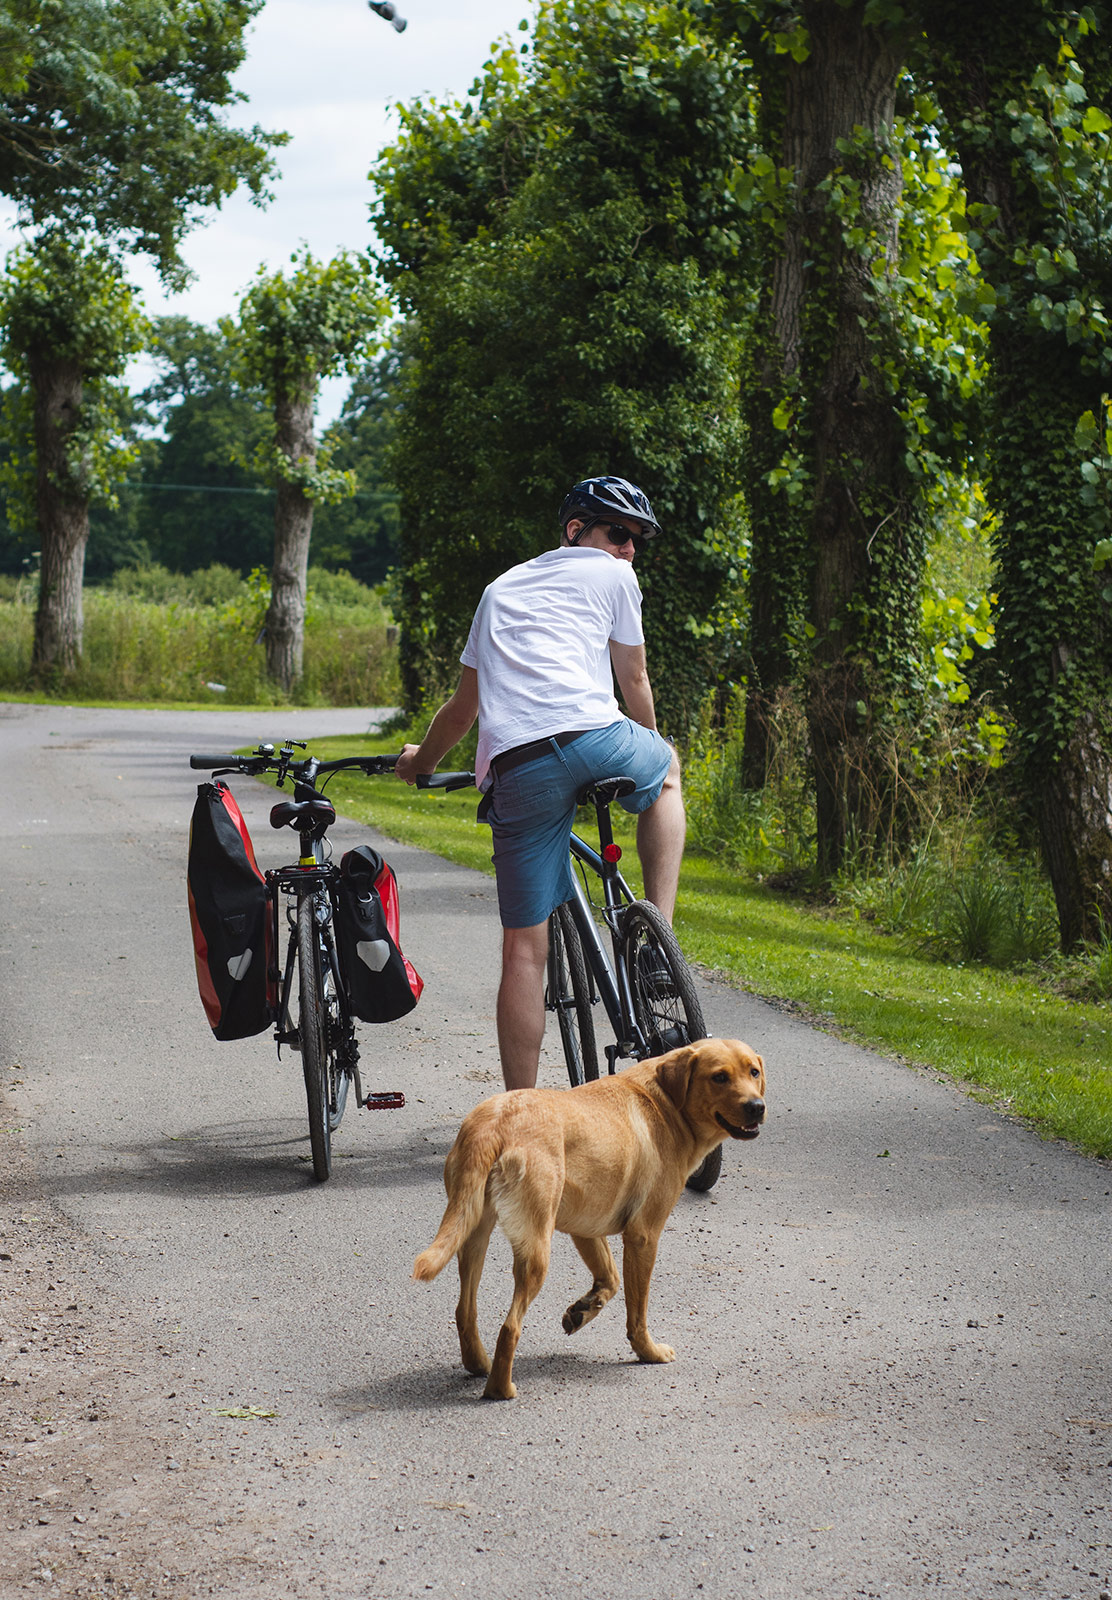 Dog with man on bike